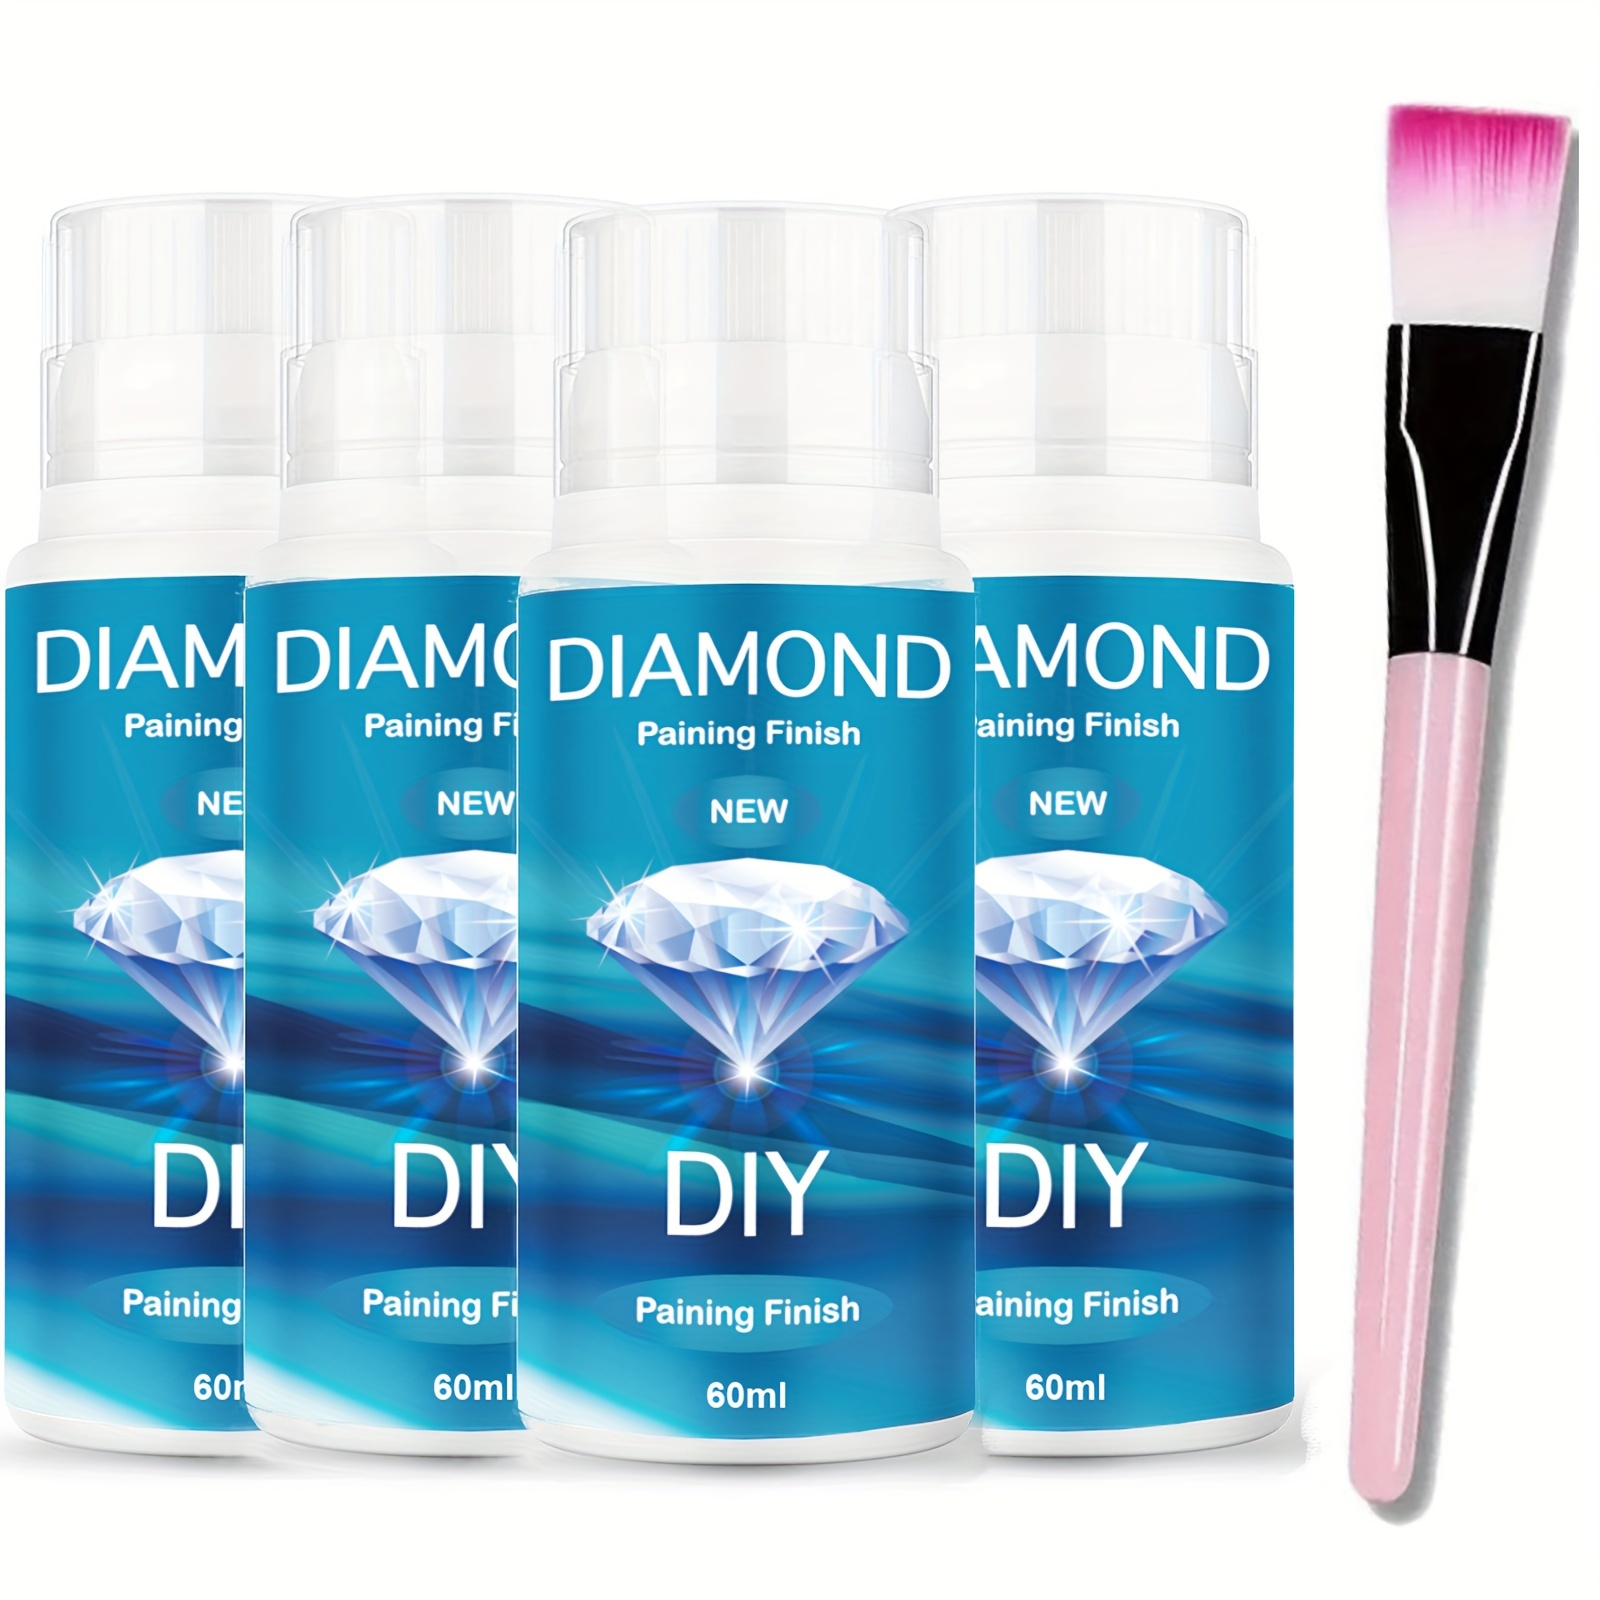 2.03oz Diamond Painting Sealer 5D Diamond Painting Art Glue Permanent Hold  & Shine Effect Sealer Diamond Painting Puzzle